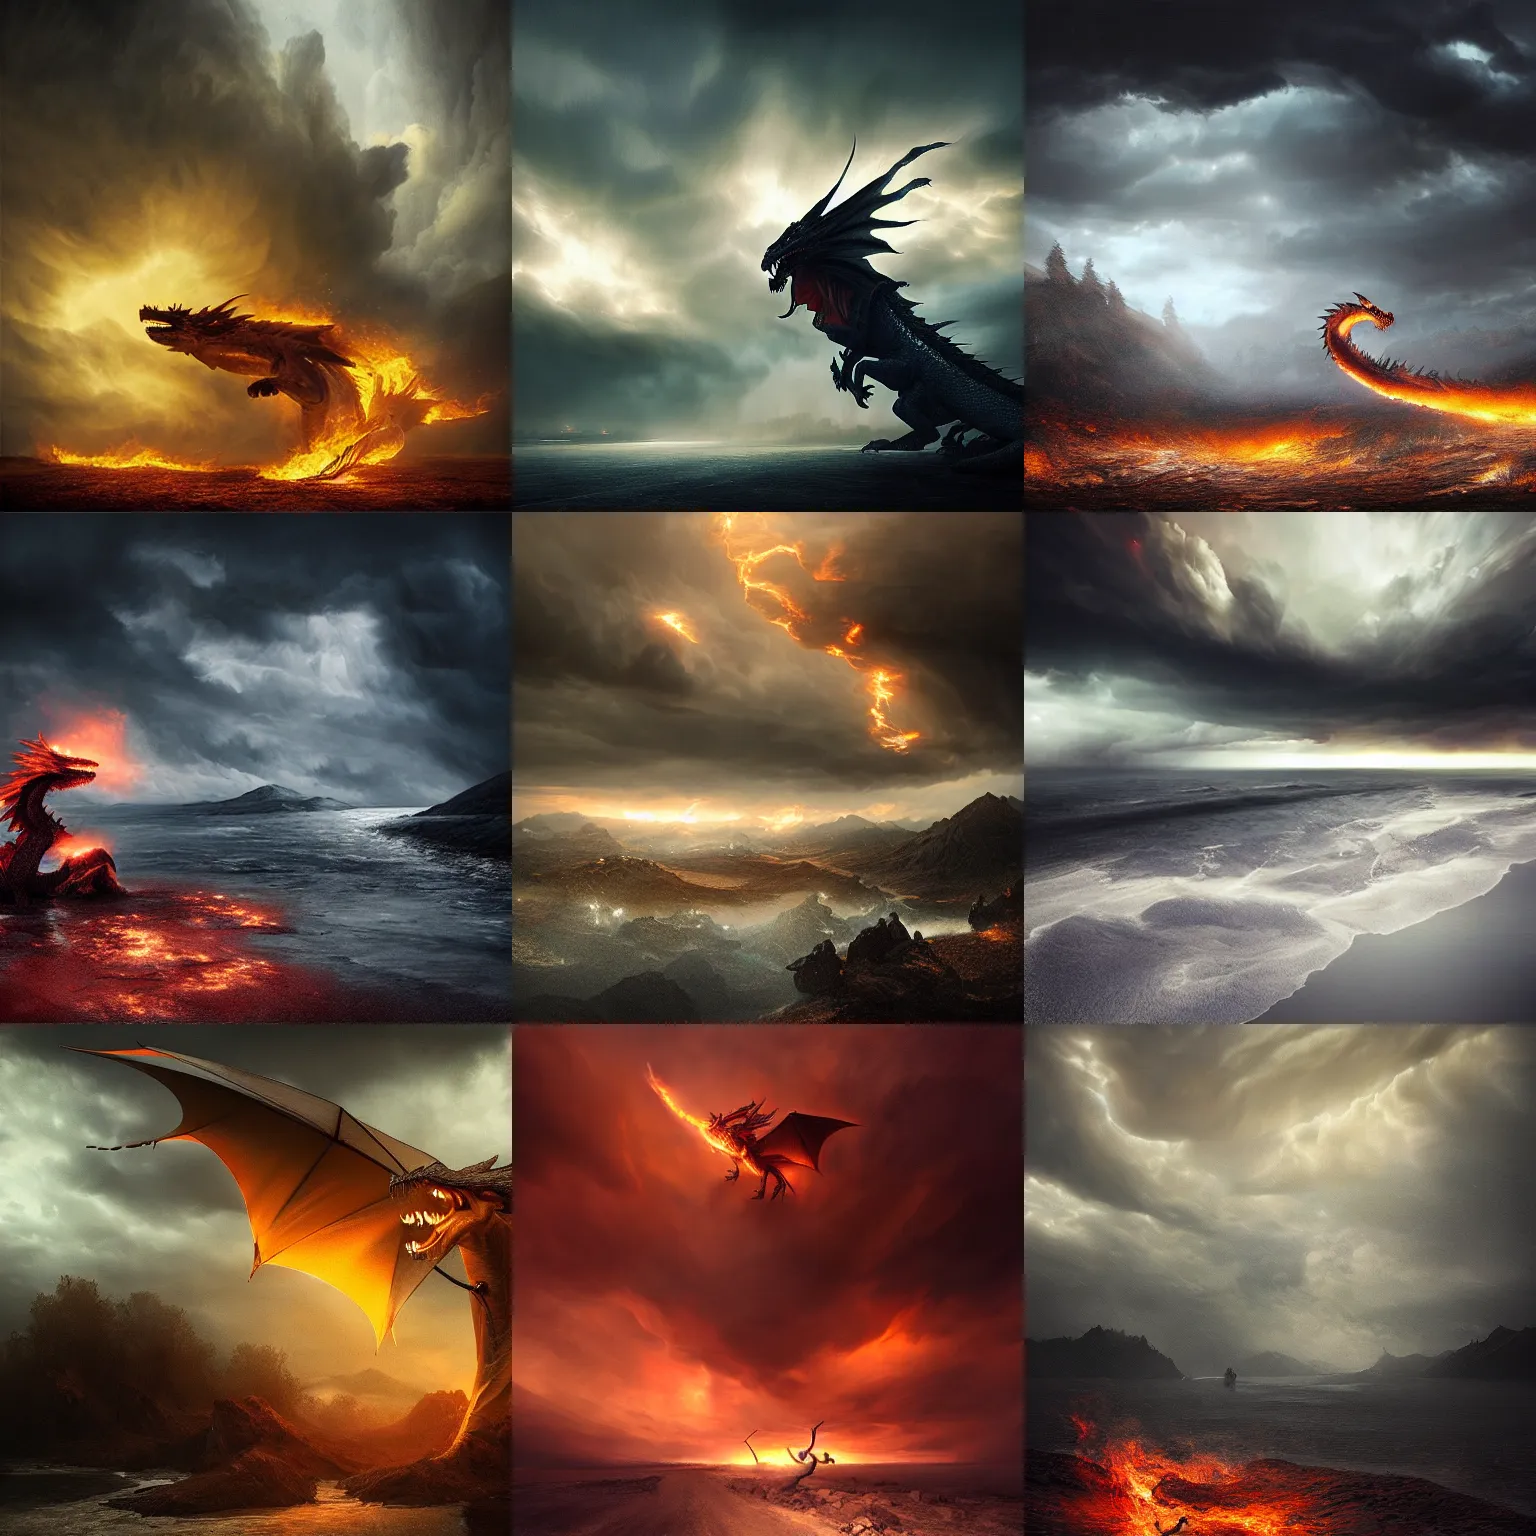 Prompt: painting of a fire breathing dragon, by michal karcz, ominous skies, brilliant lighting, digital art, award winning